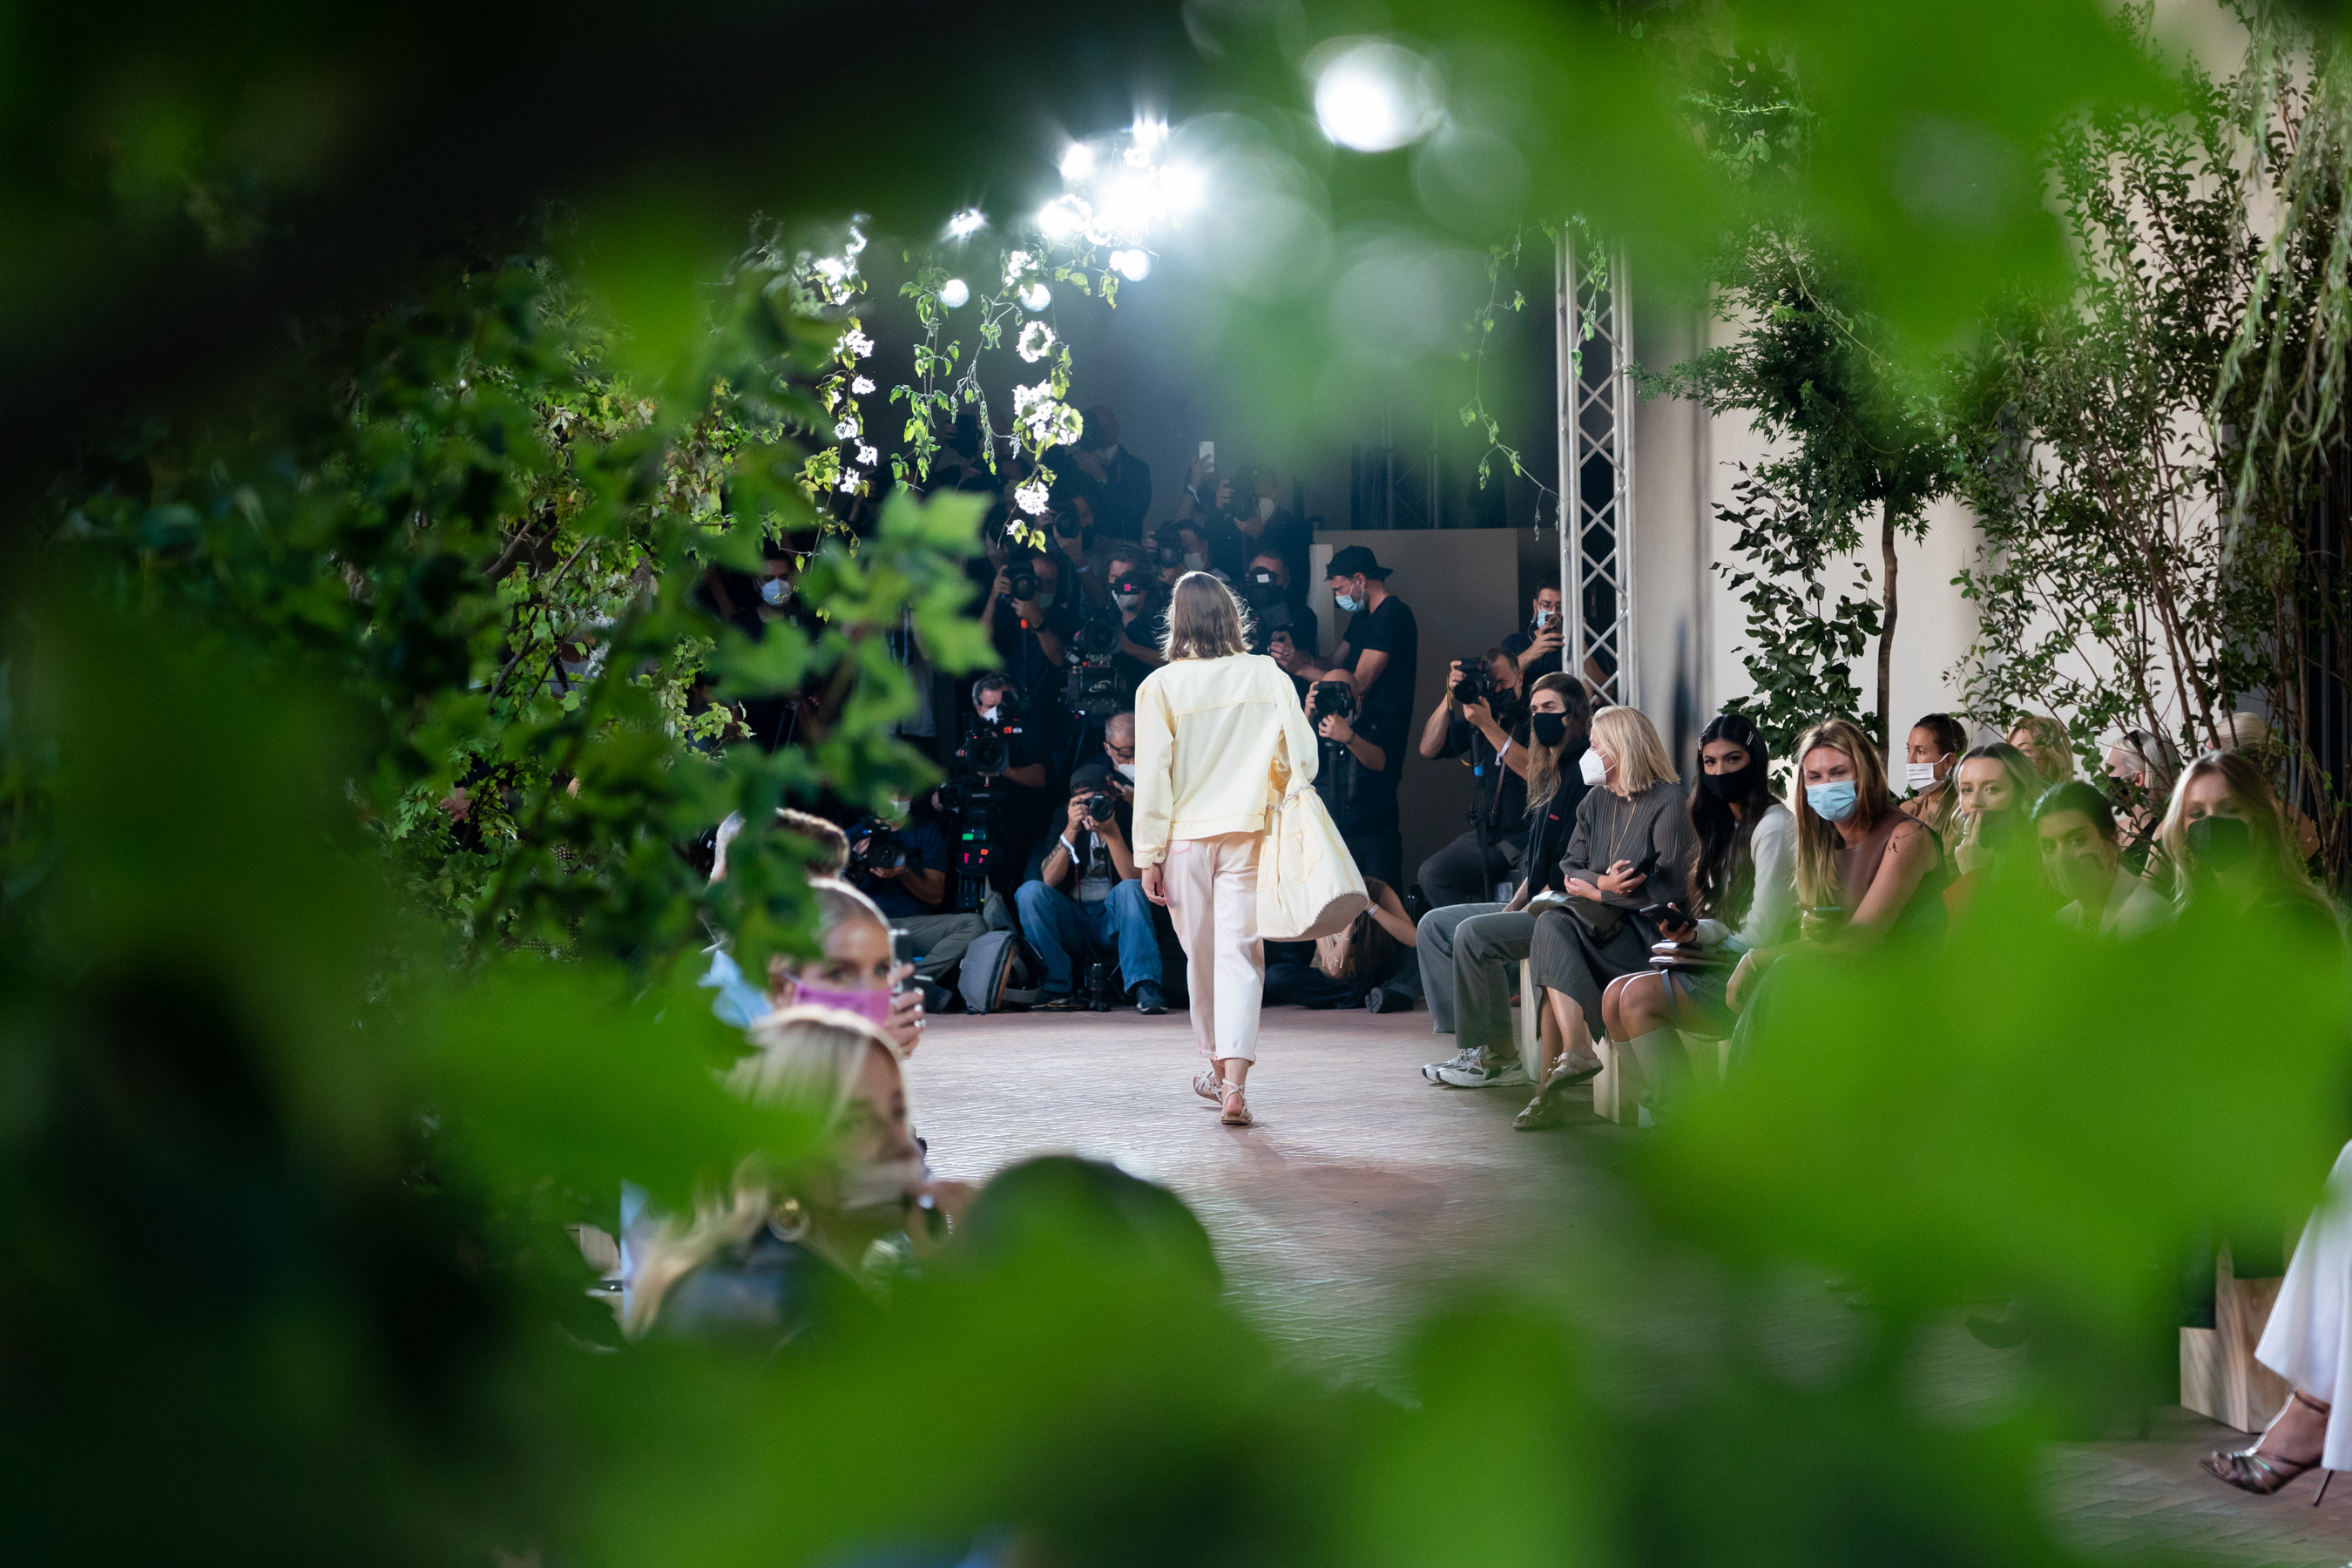 Alberta Ferretti Spring 2021 Fashion Show Atmosphere